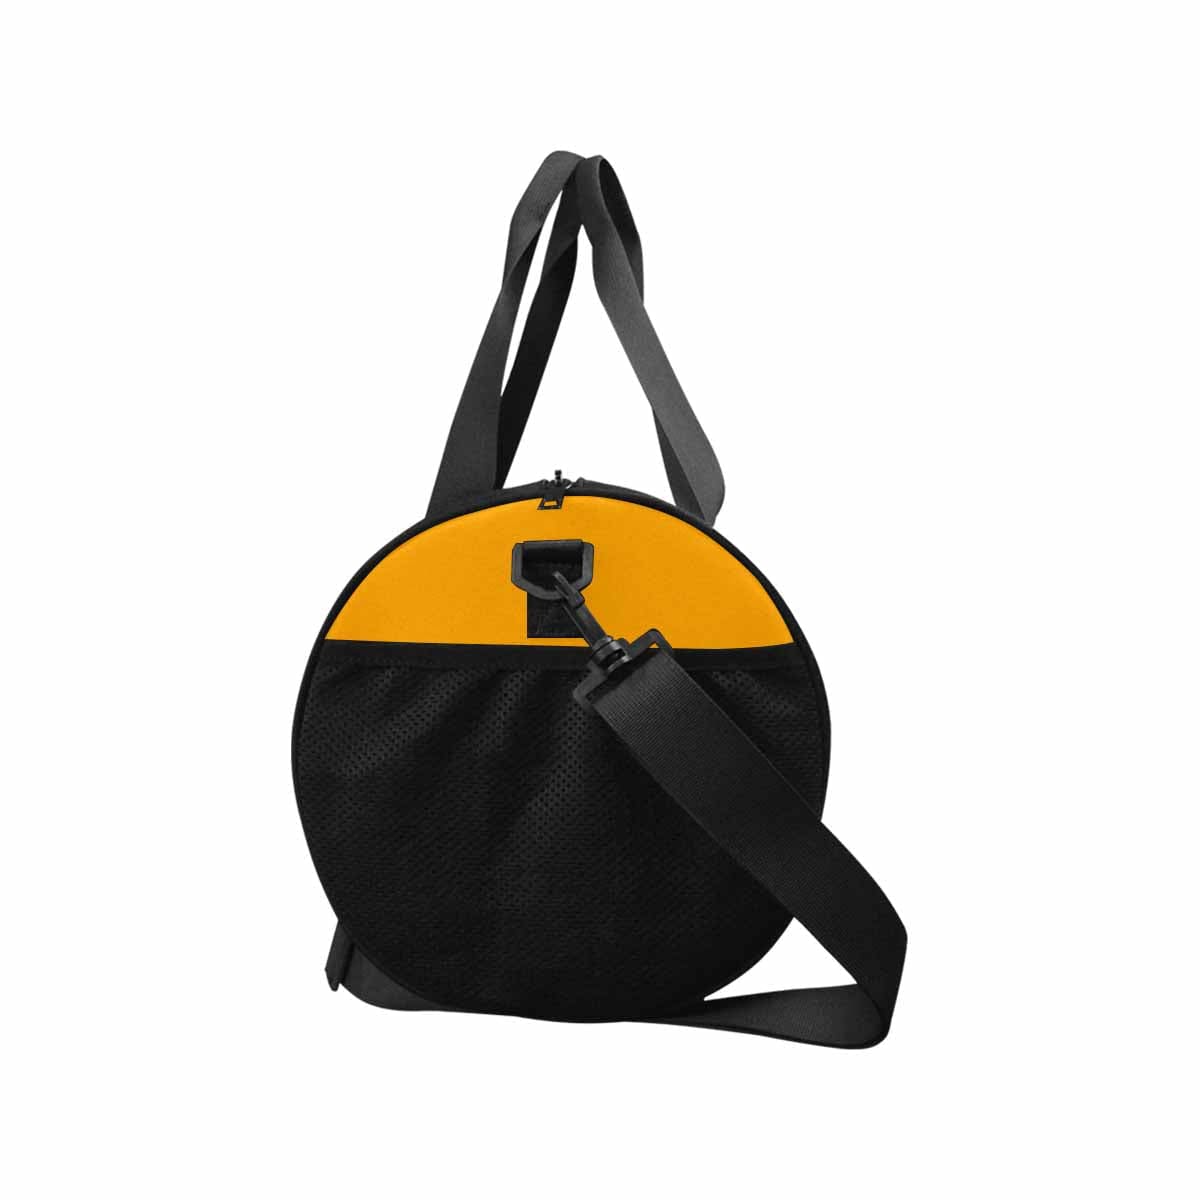 Travel Duffel Bag Orange Carry On - Bags | Duffel Bags